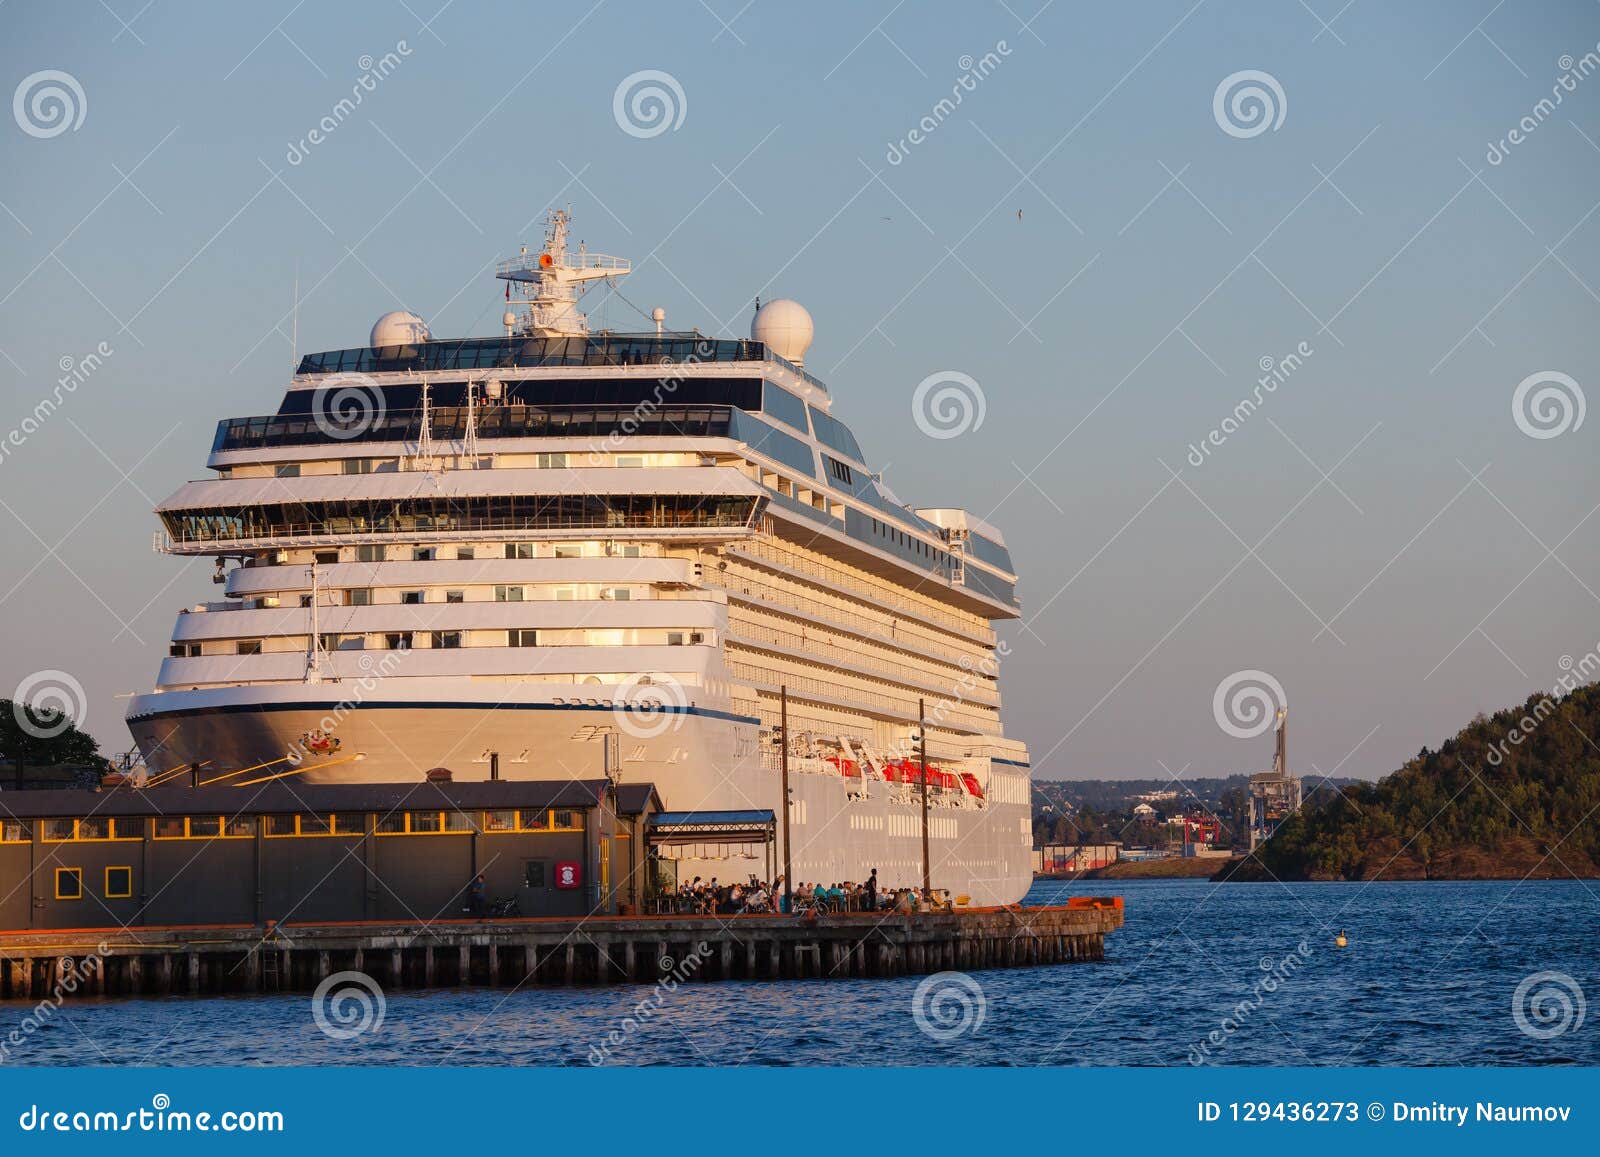 MS Marina Cruise Ship in Oslo Cruiseterminal Norway Scan Editorial Stock Photo - Image of luxury, dock: 129436273